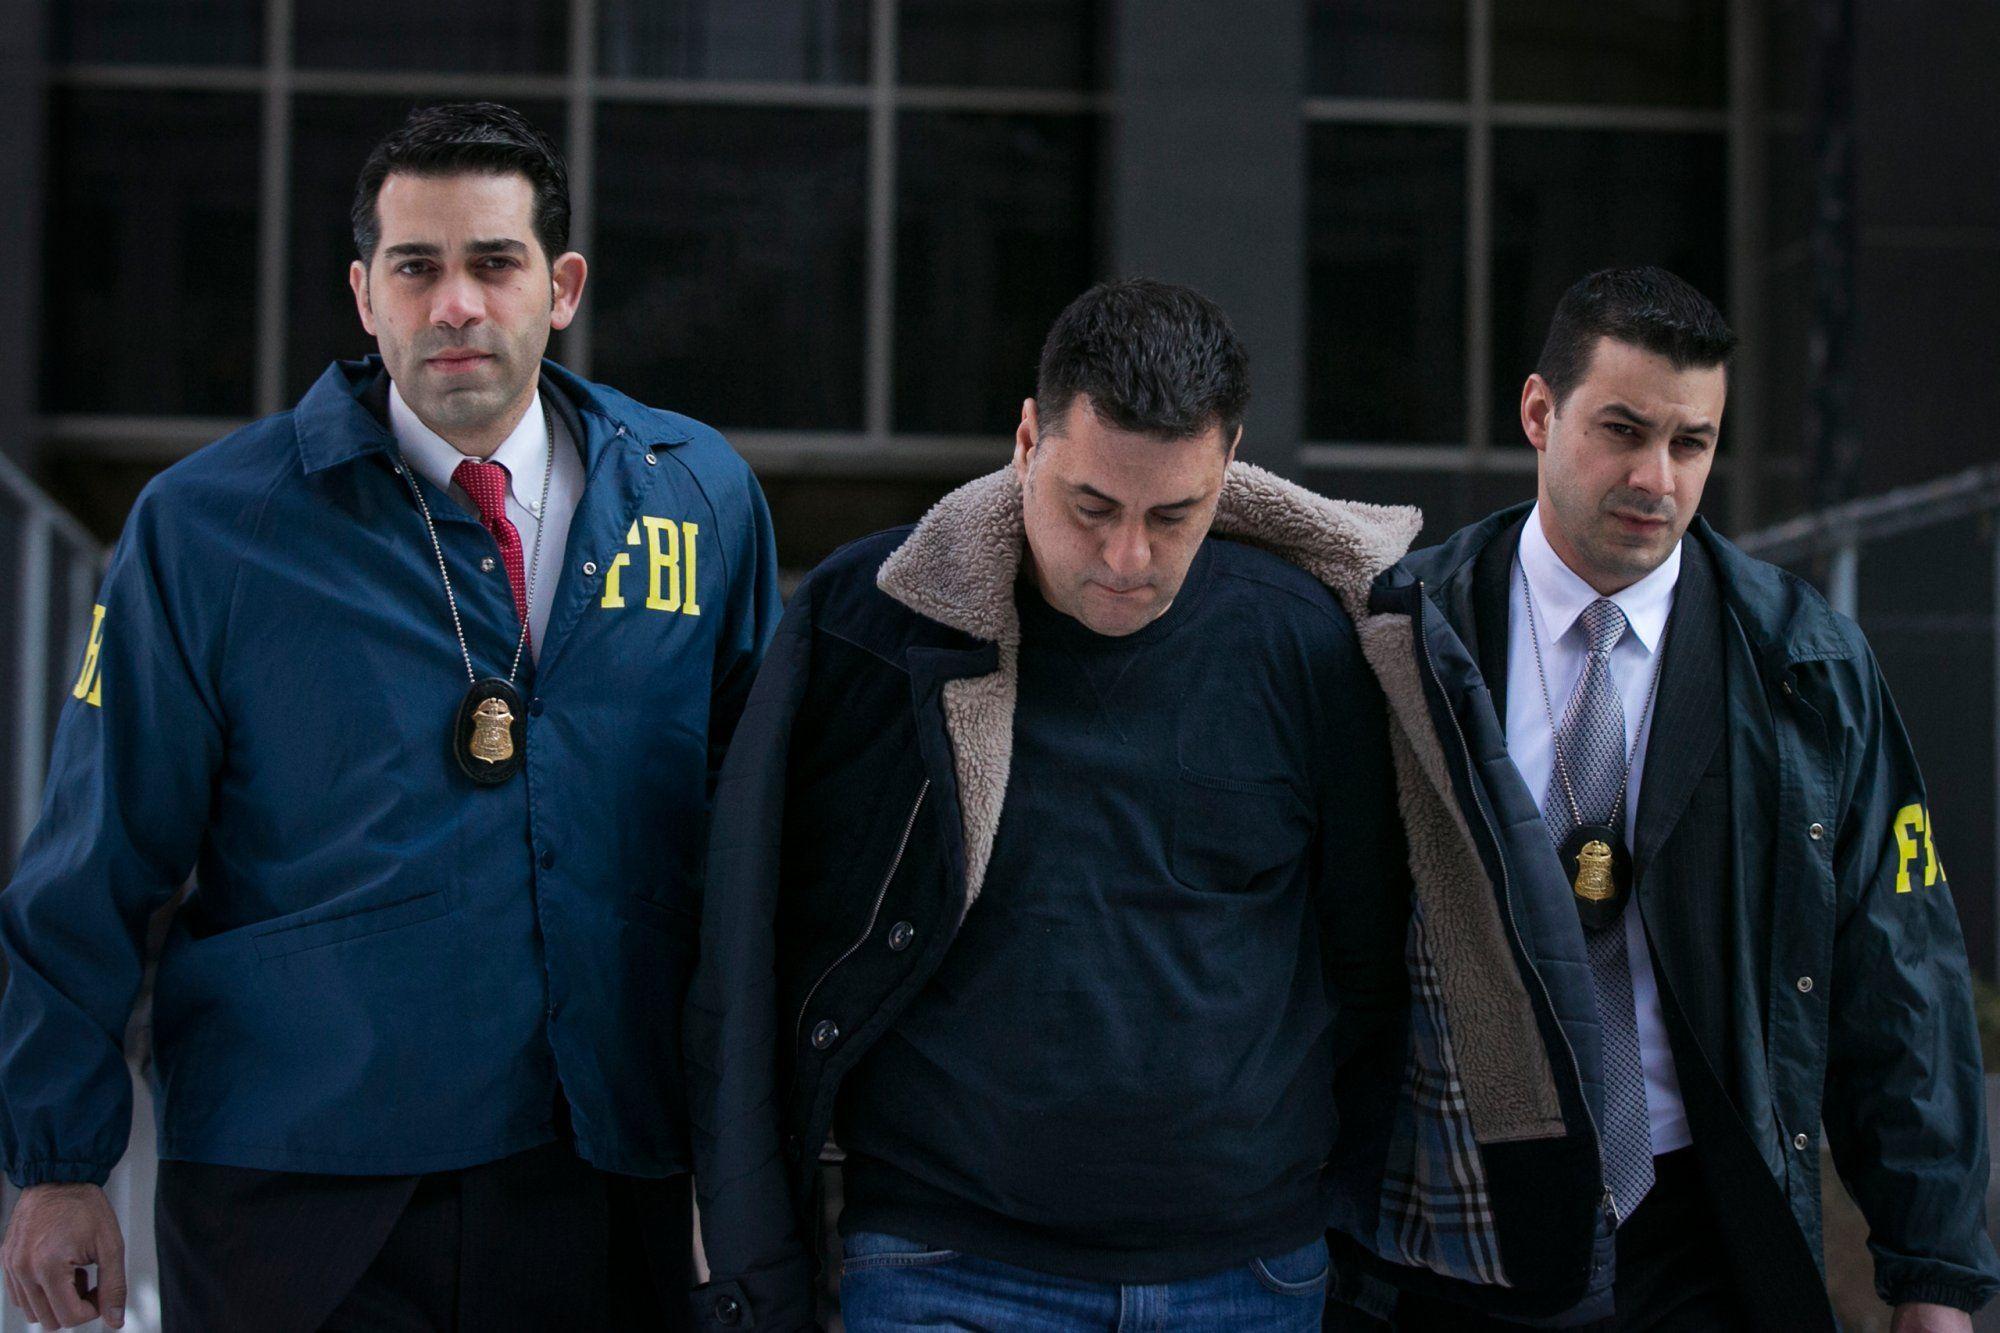 Undercover FBI Logo - Mob International Drug Kingpin: The Undercover FBI Agent Made Me Do